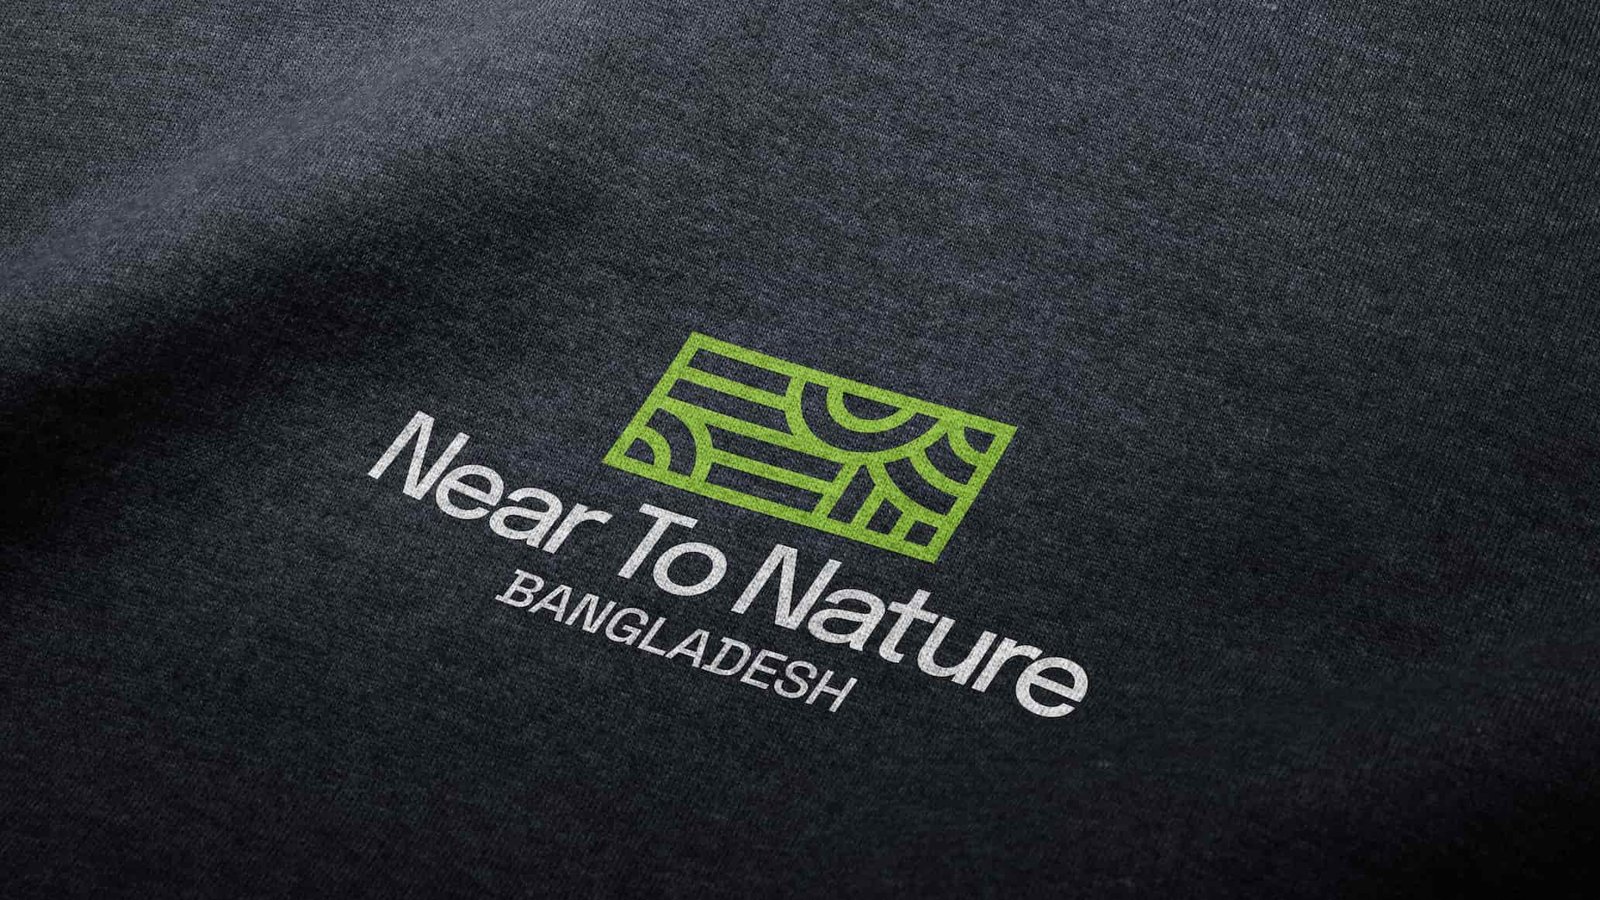 Near to nature Bangladesh logo mockup in carpet